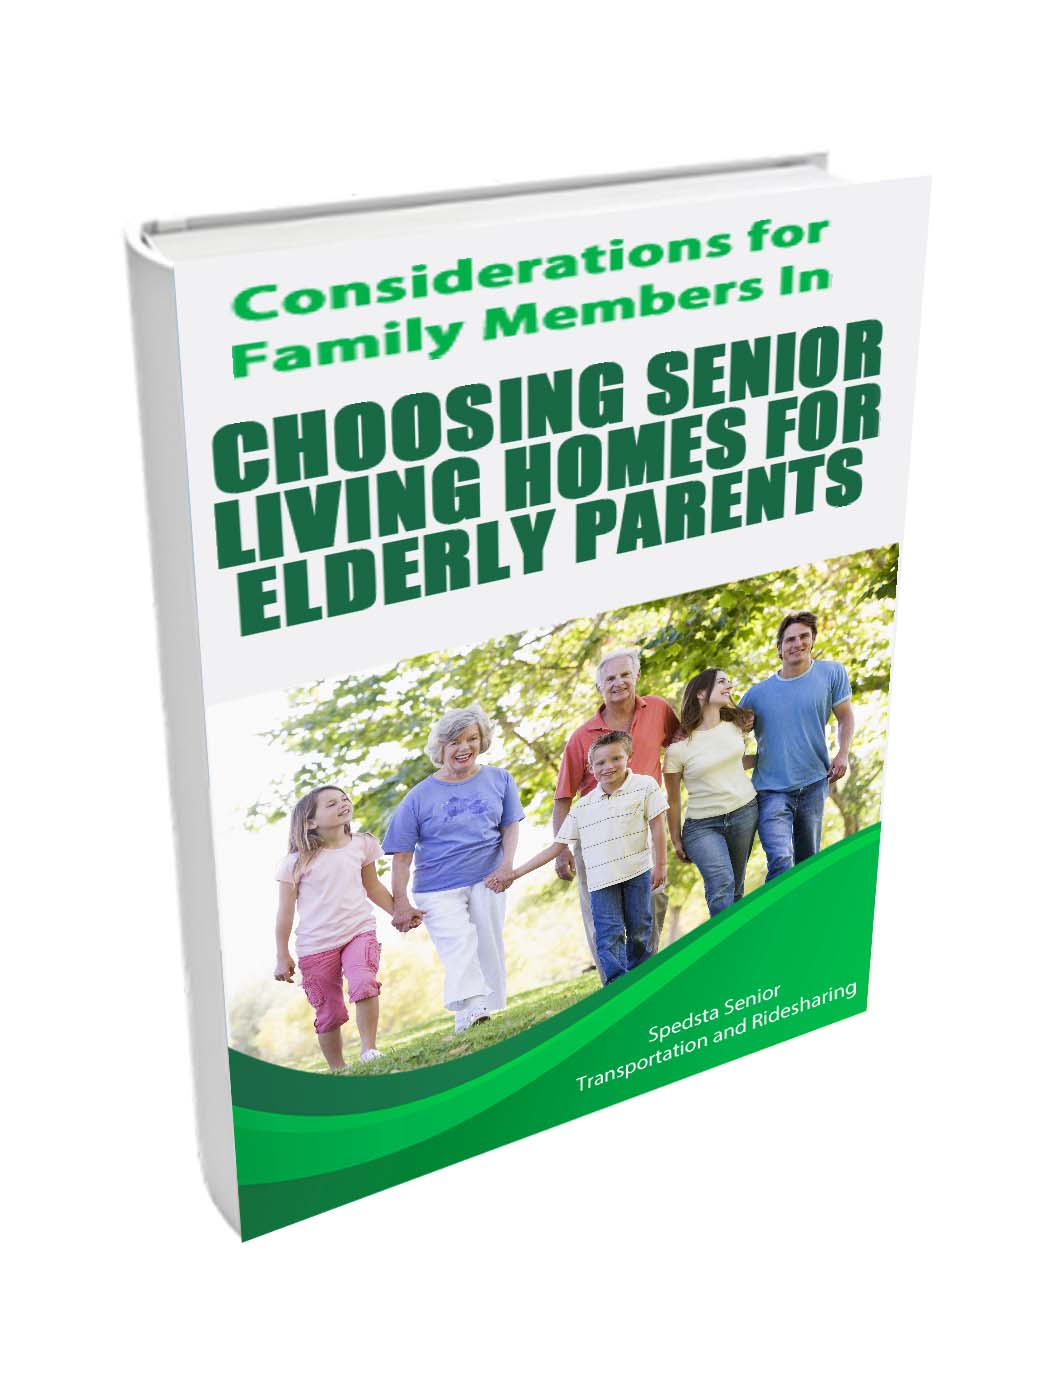 How Family Members are Choosing Senior Living Homes for their Elderly Parents: 4 Tips on Transportation